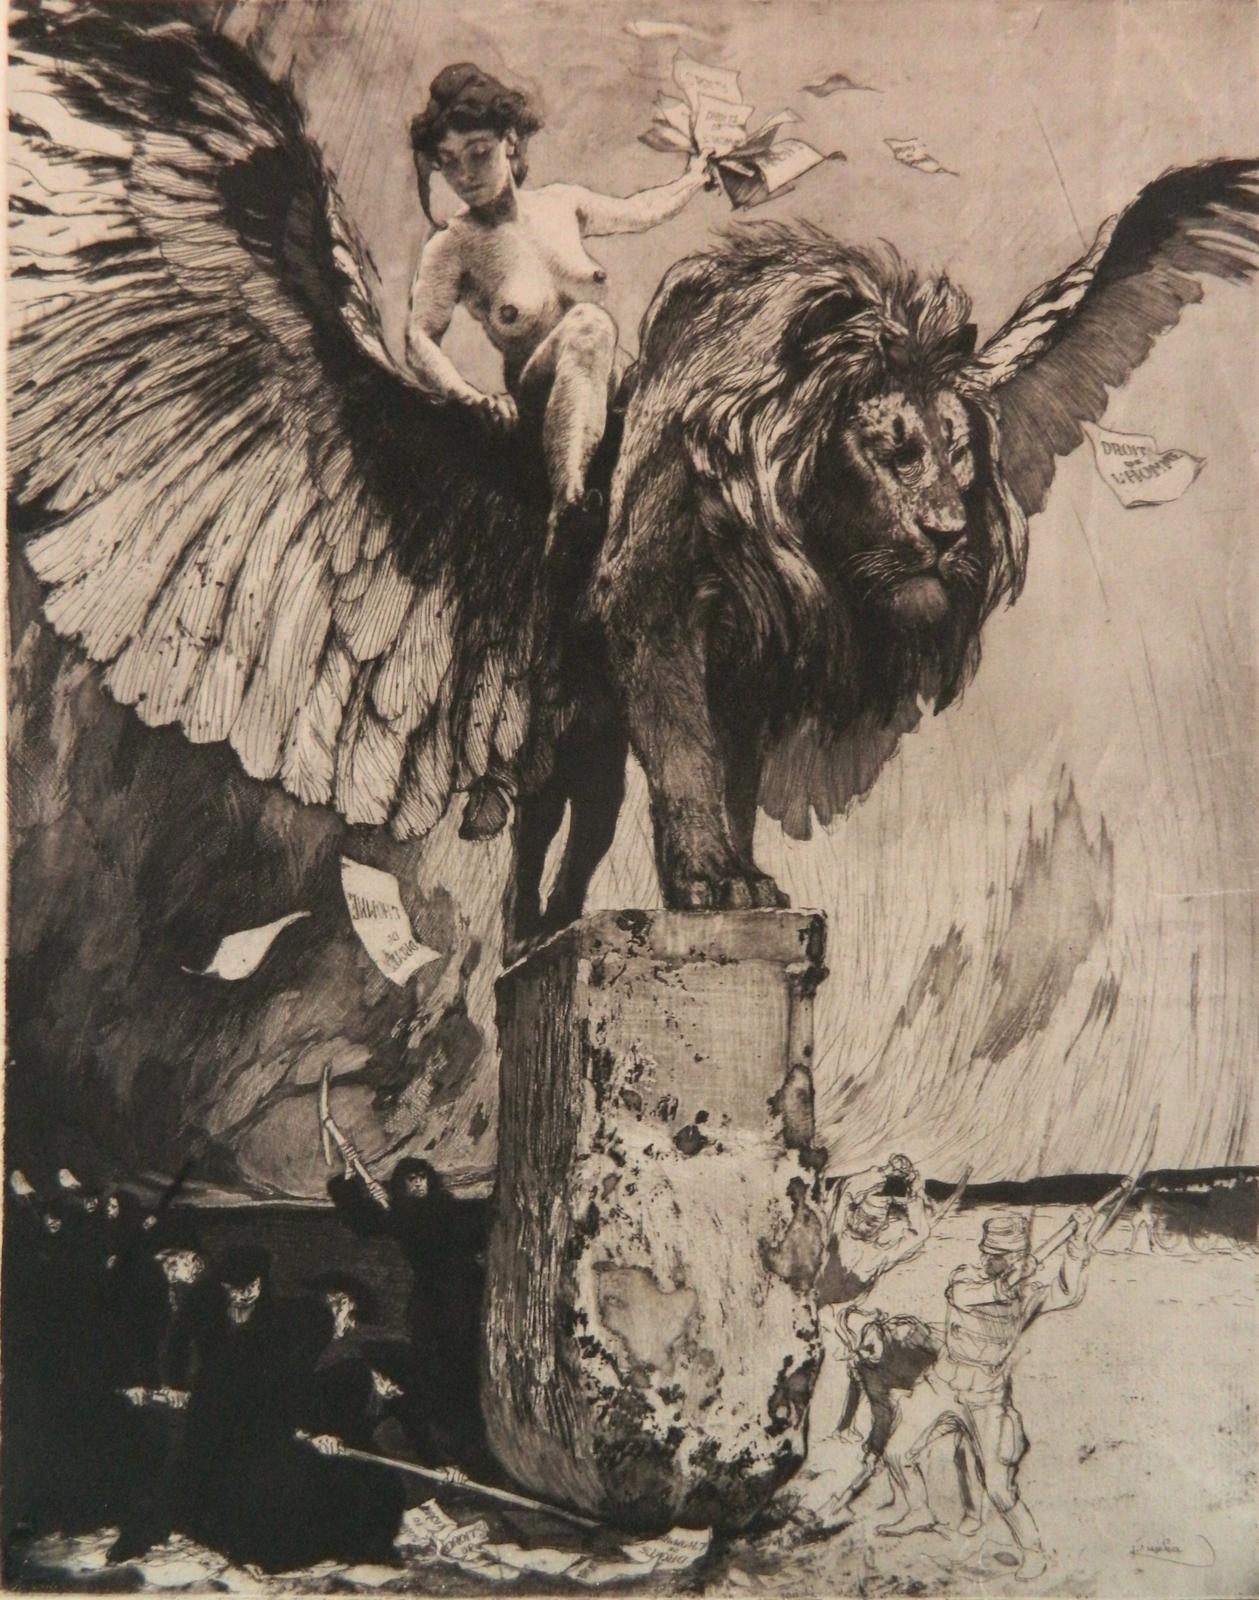 Artwork by František Kupka, Droits de L'Homme, Made of etching and aquatint